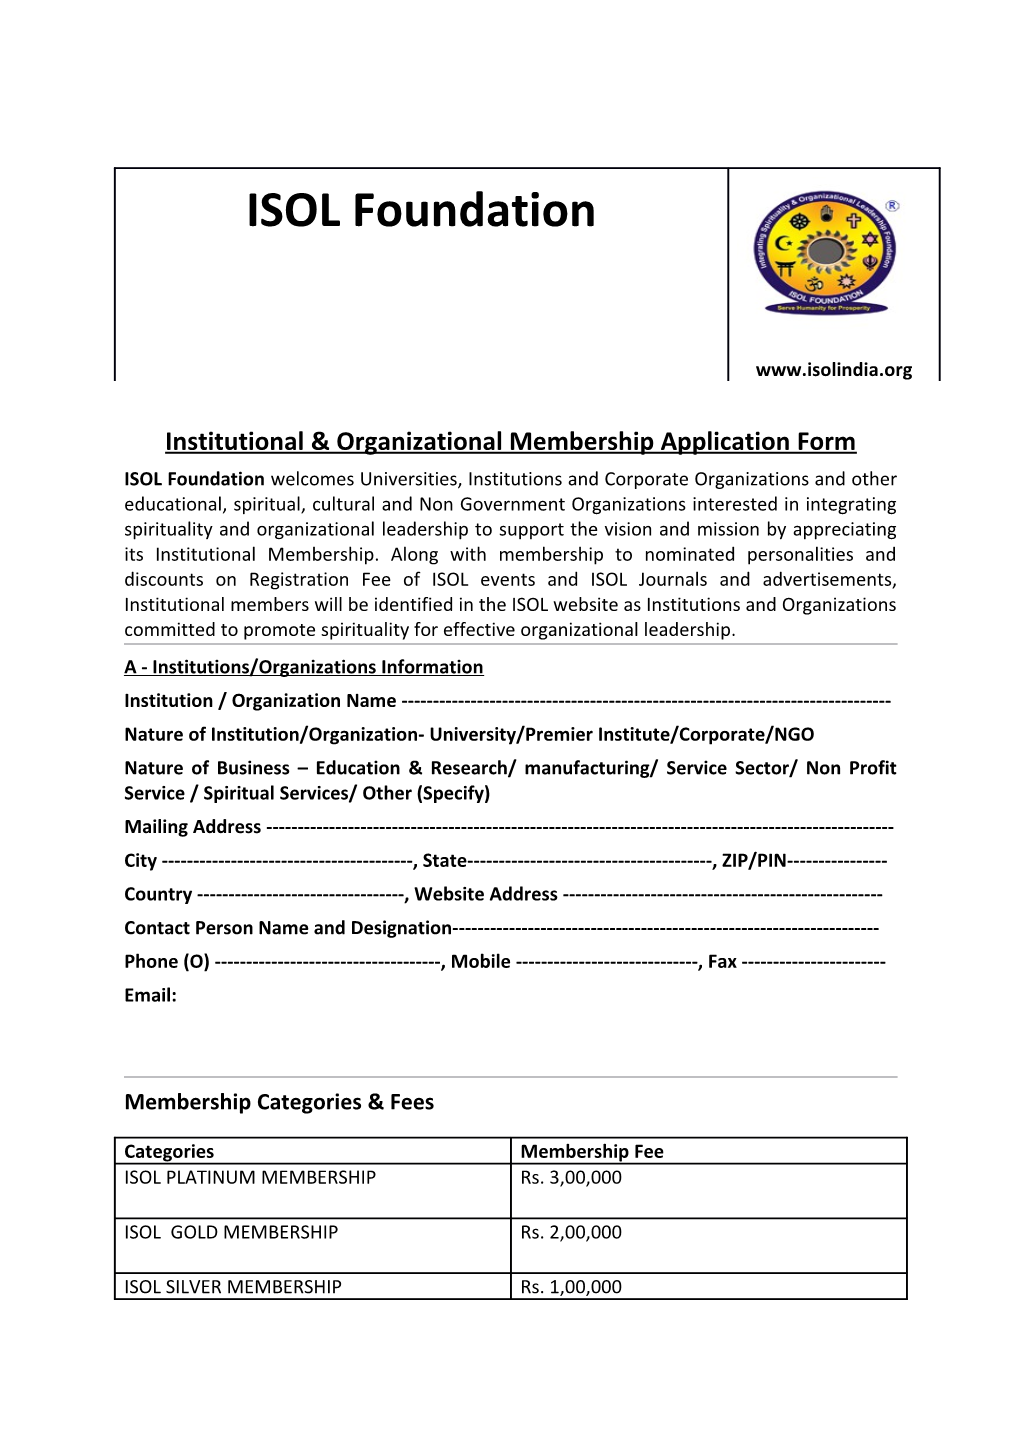 Institutional & Organizational Membership Application Form